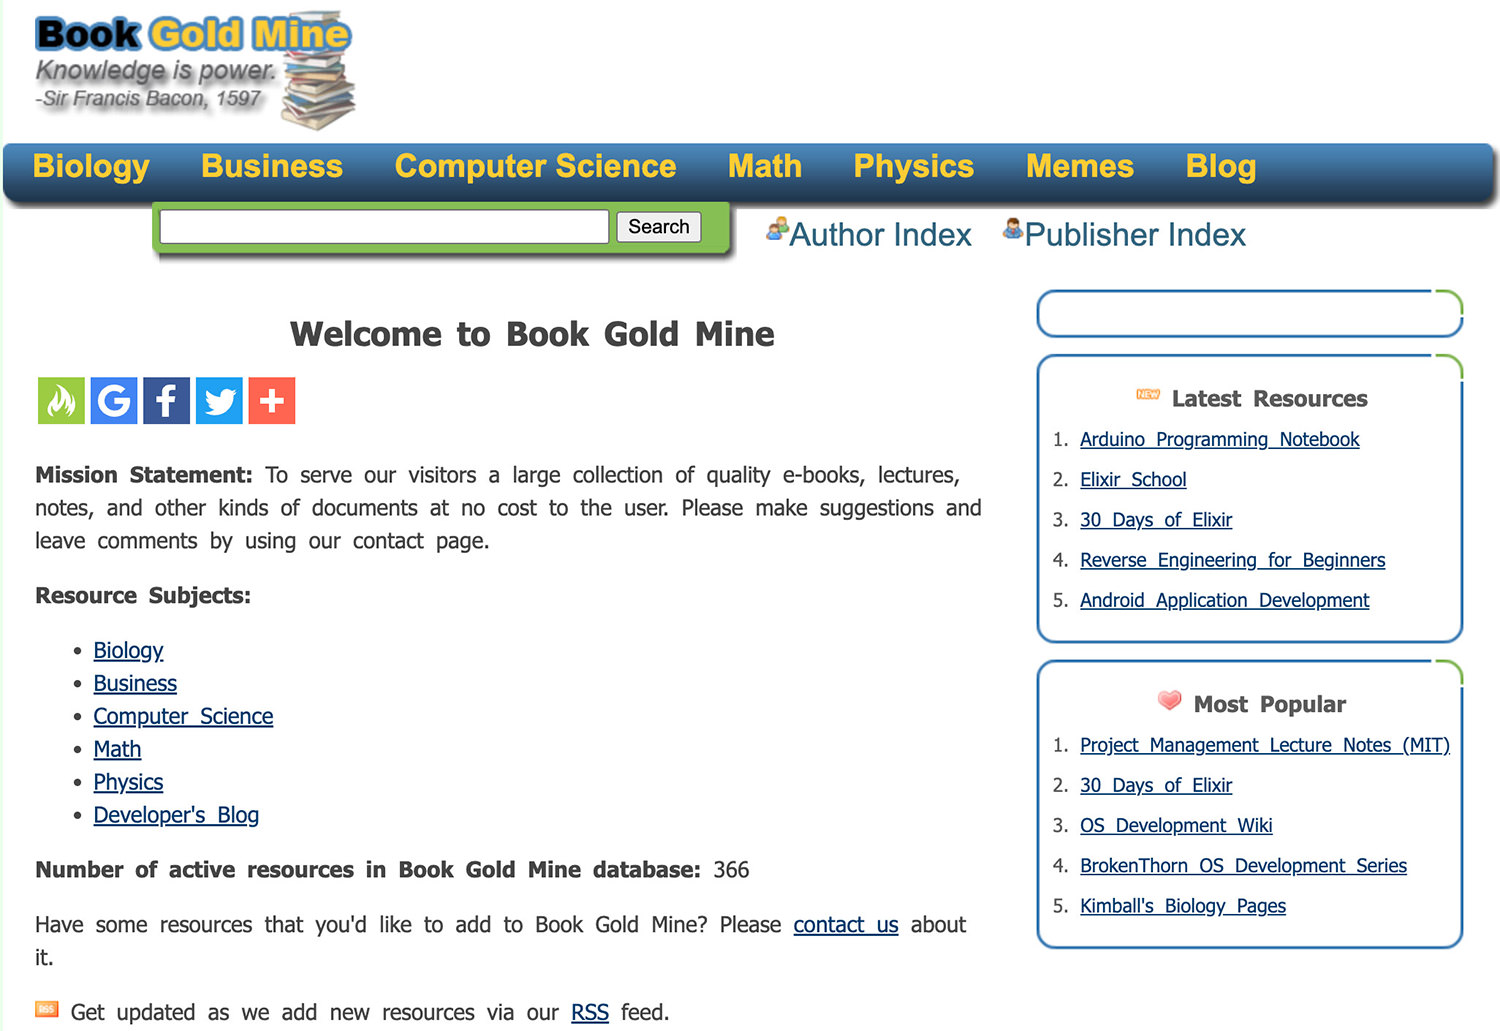 Image of Book Gold Mine website